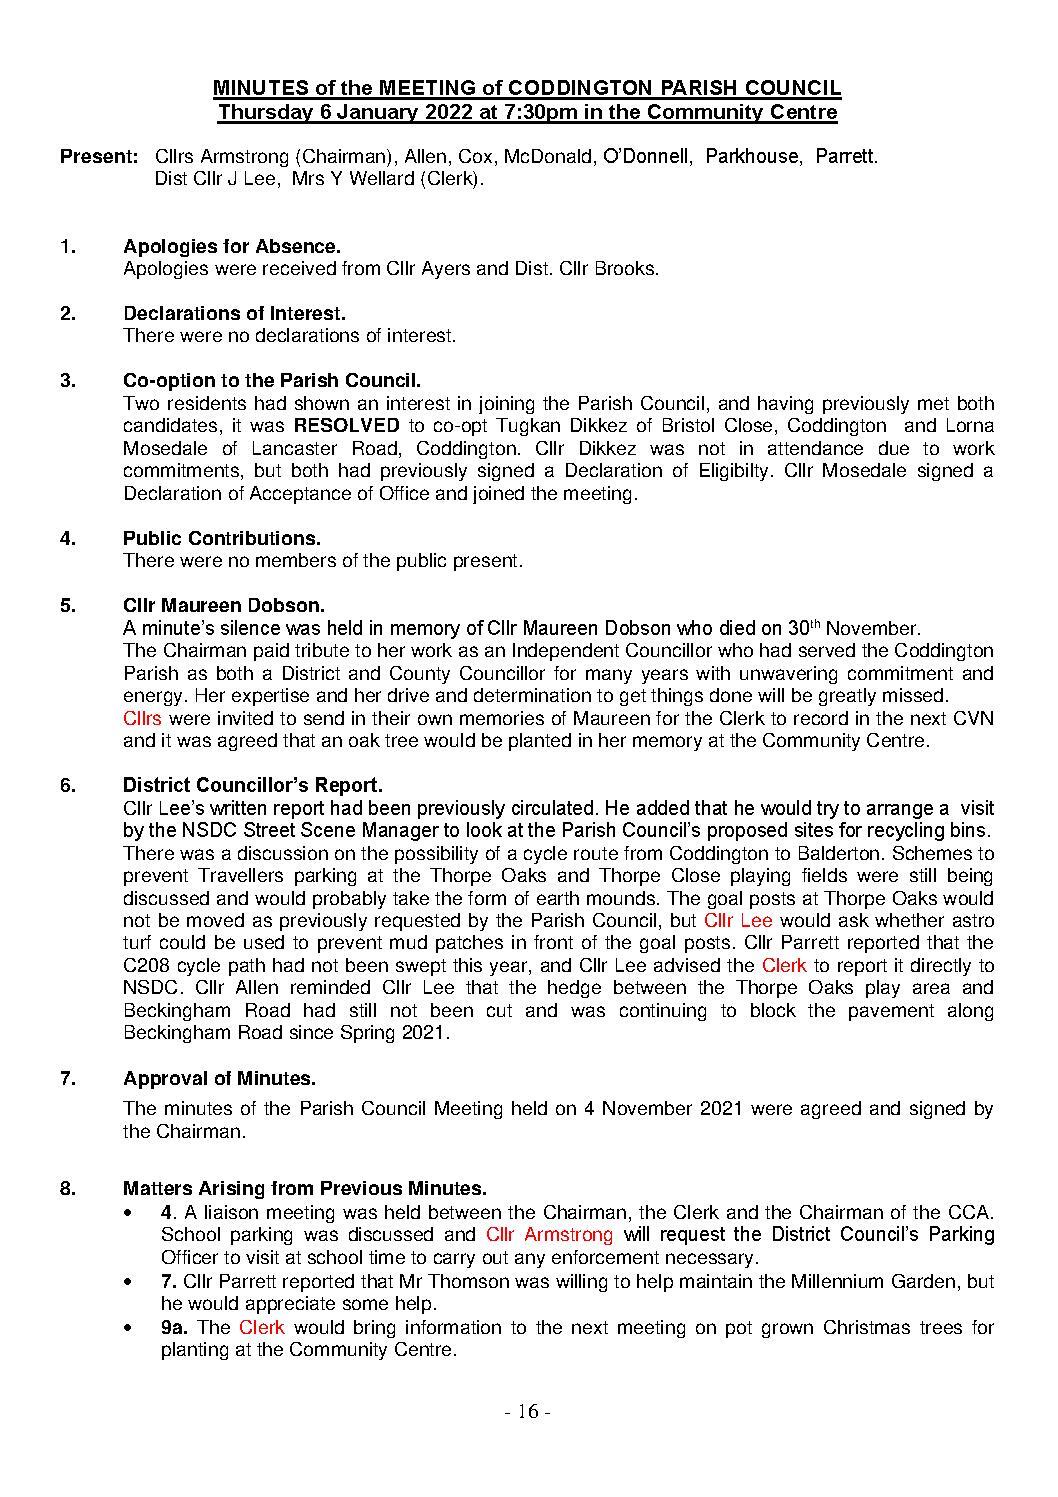 Parish Council Meeting 6 January 2022 Minutes